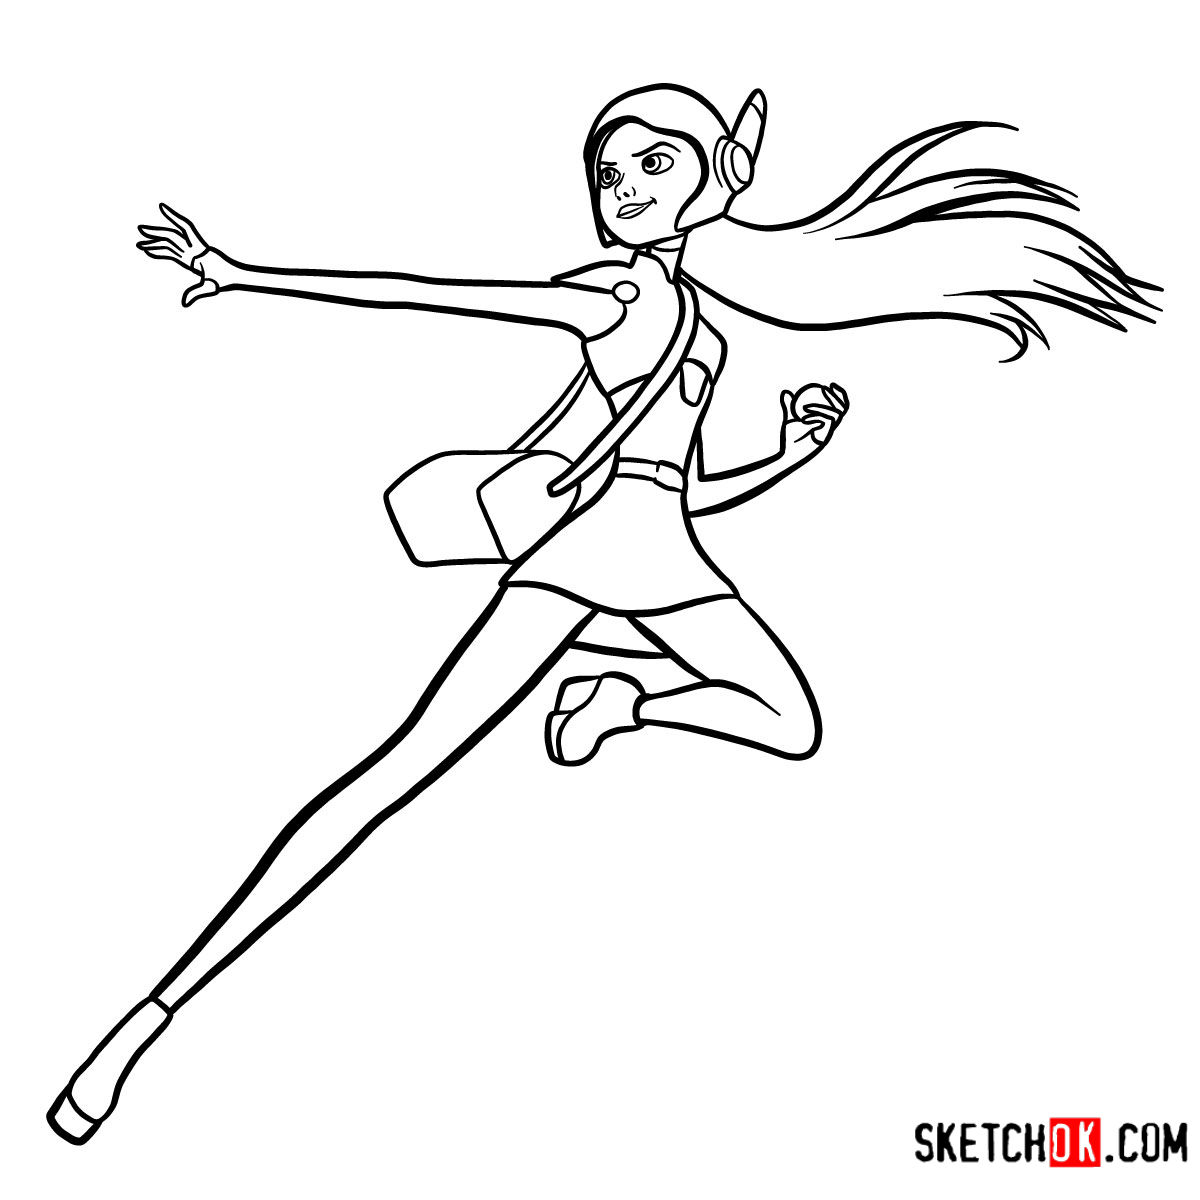 How to draw Honey Lemon in her superhero suit